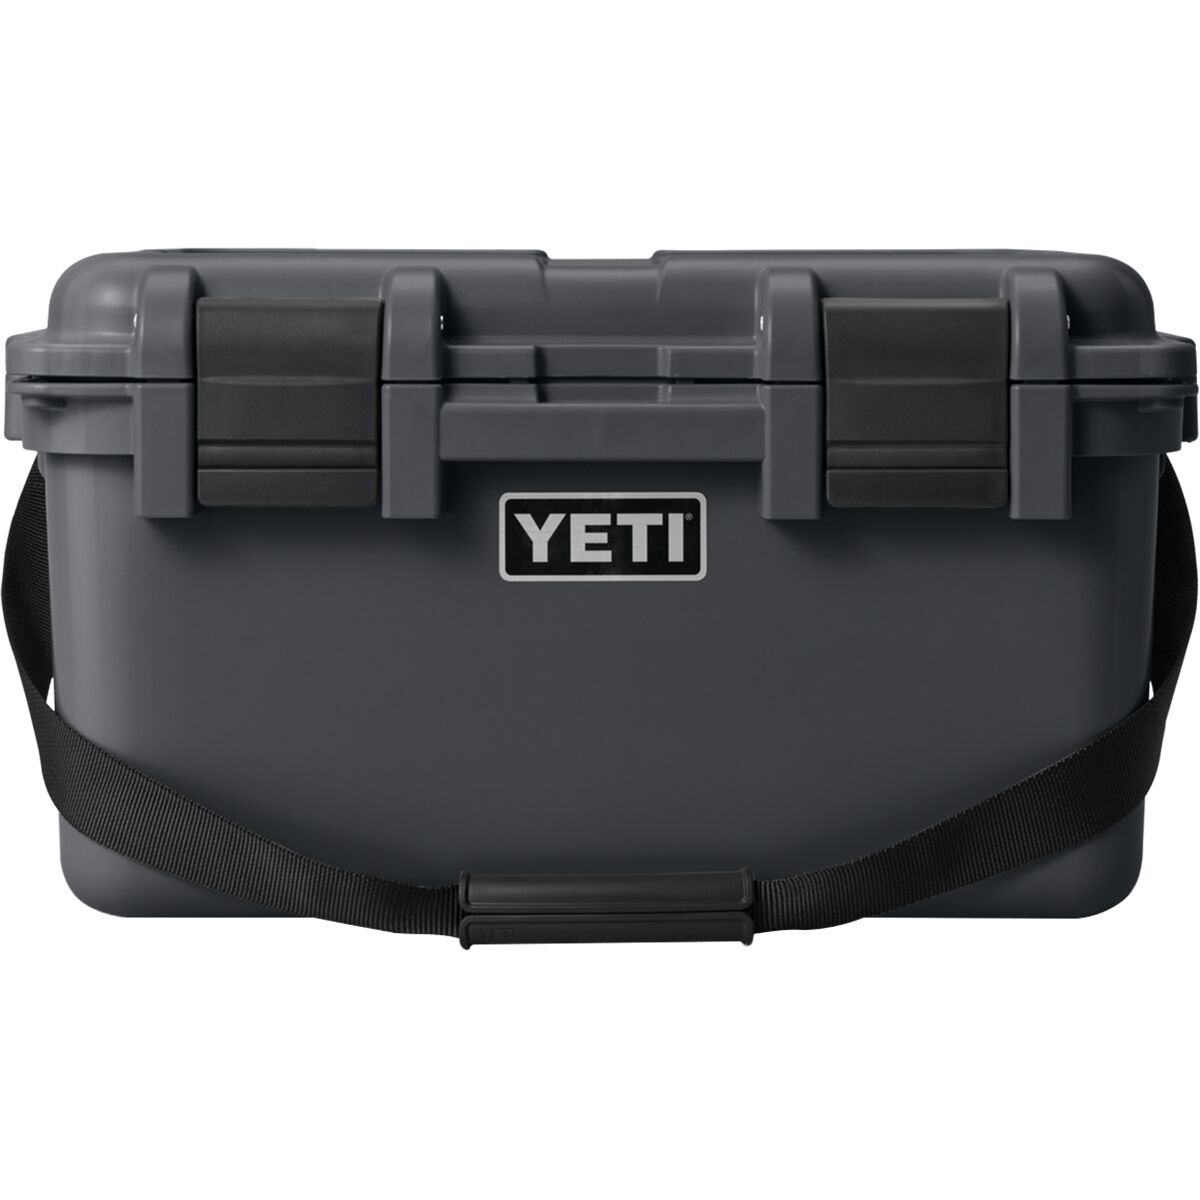 Ultimate organization  Yeti LoadOut GoBox 30 Gear Case - The Gear